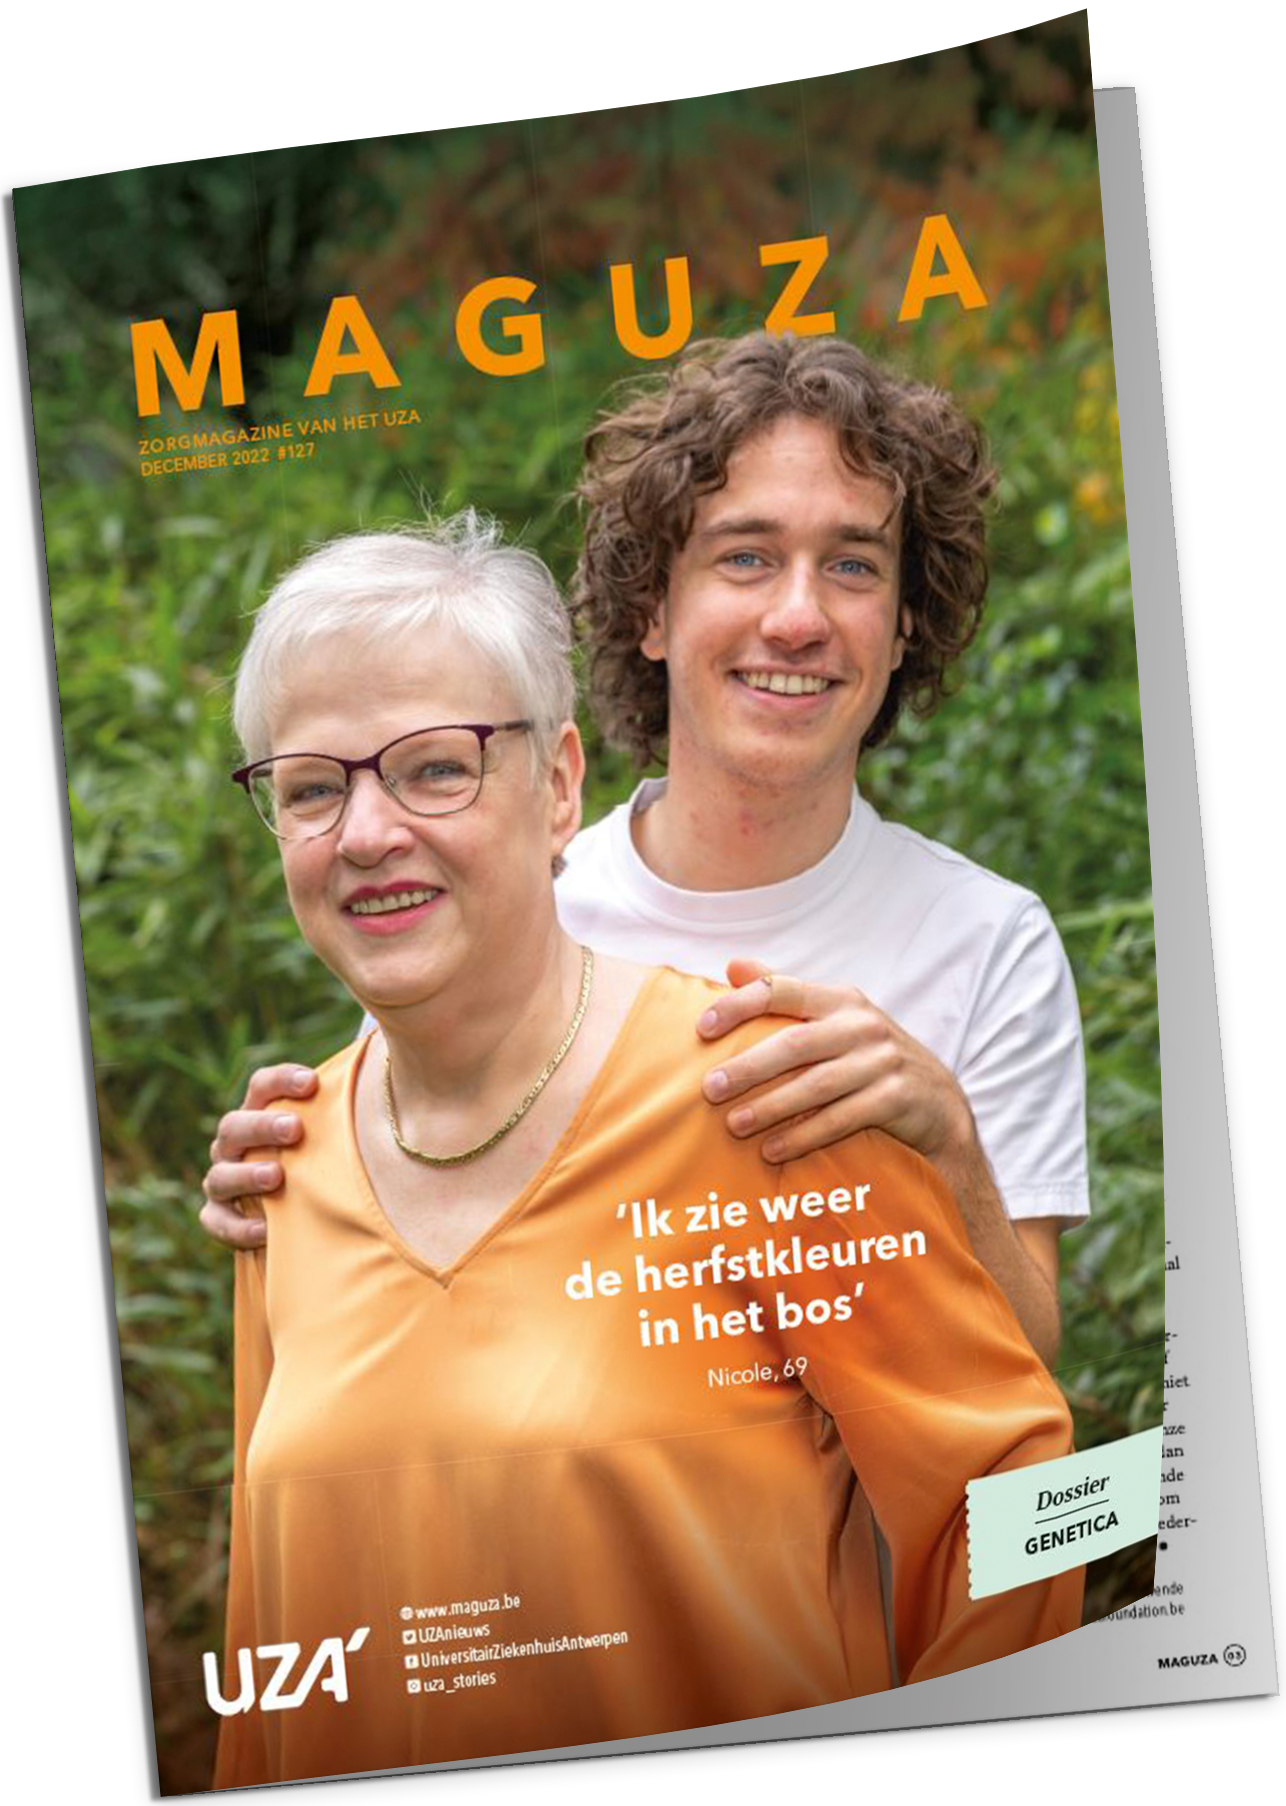 Maguza magazine